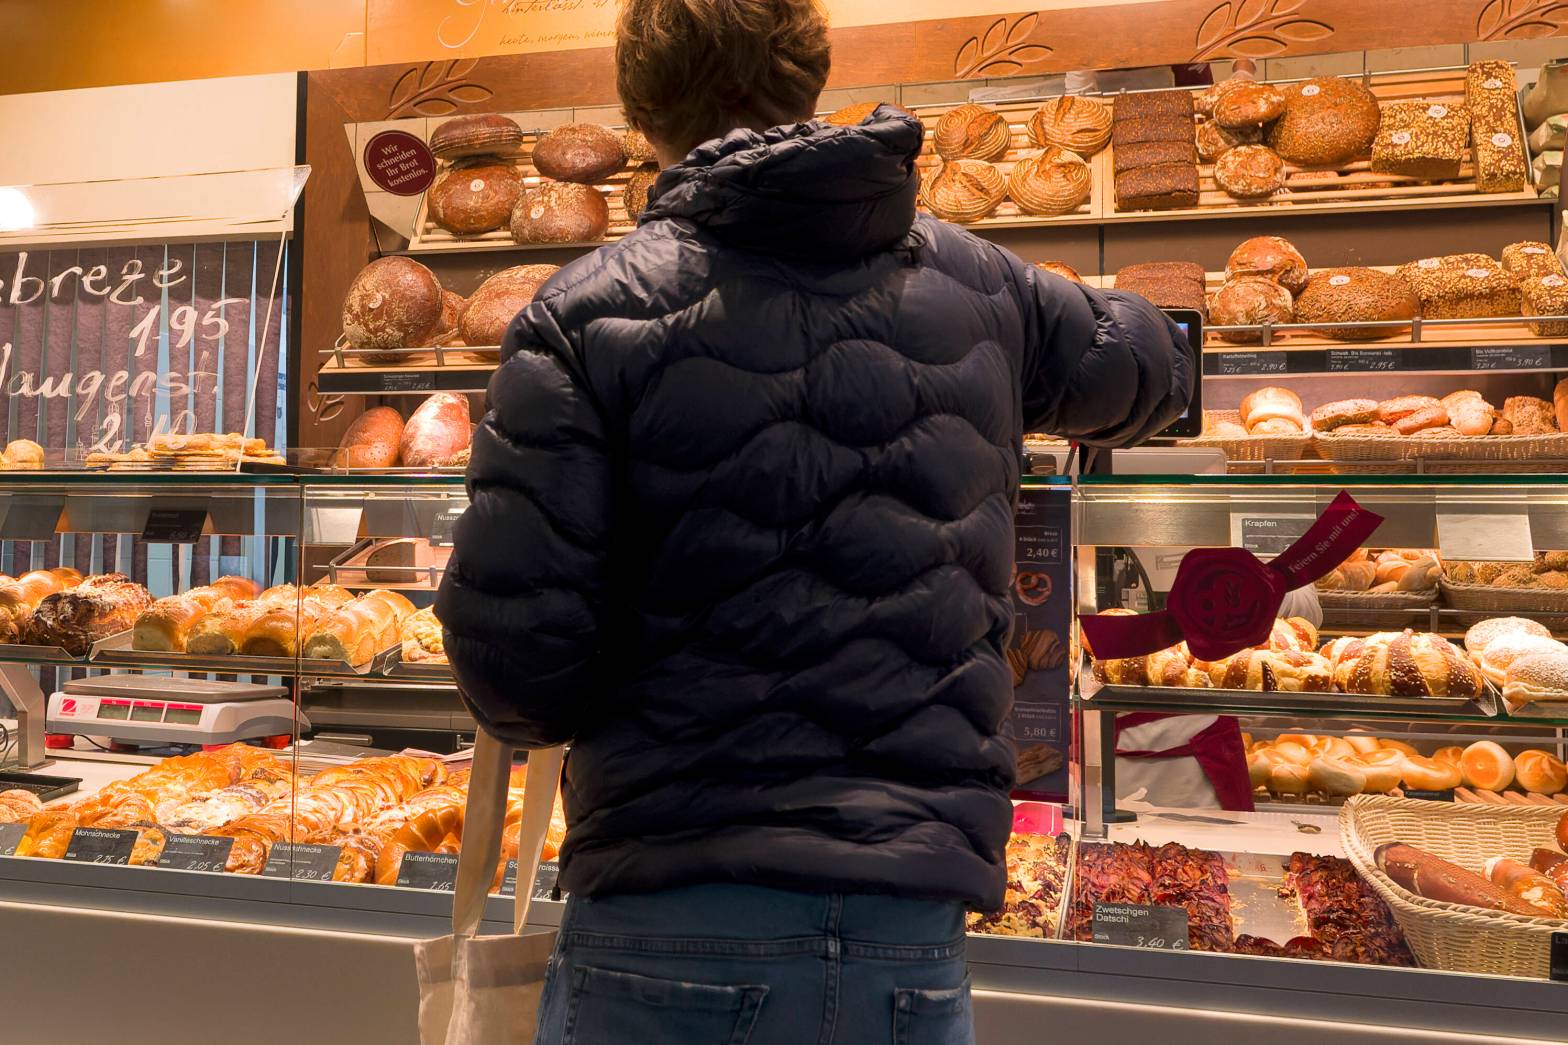 NRW: Bäckerei-Kette geht radikalen Schritt – Kunden enttäuscht